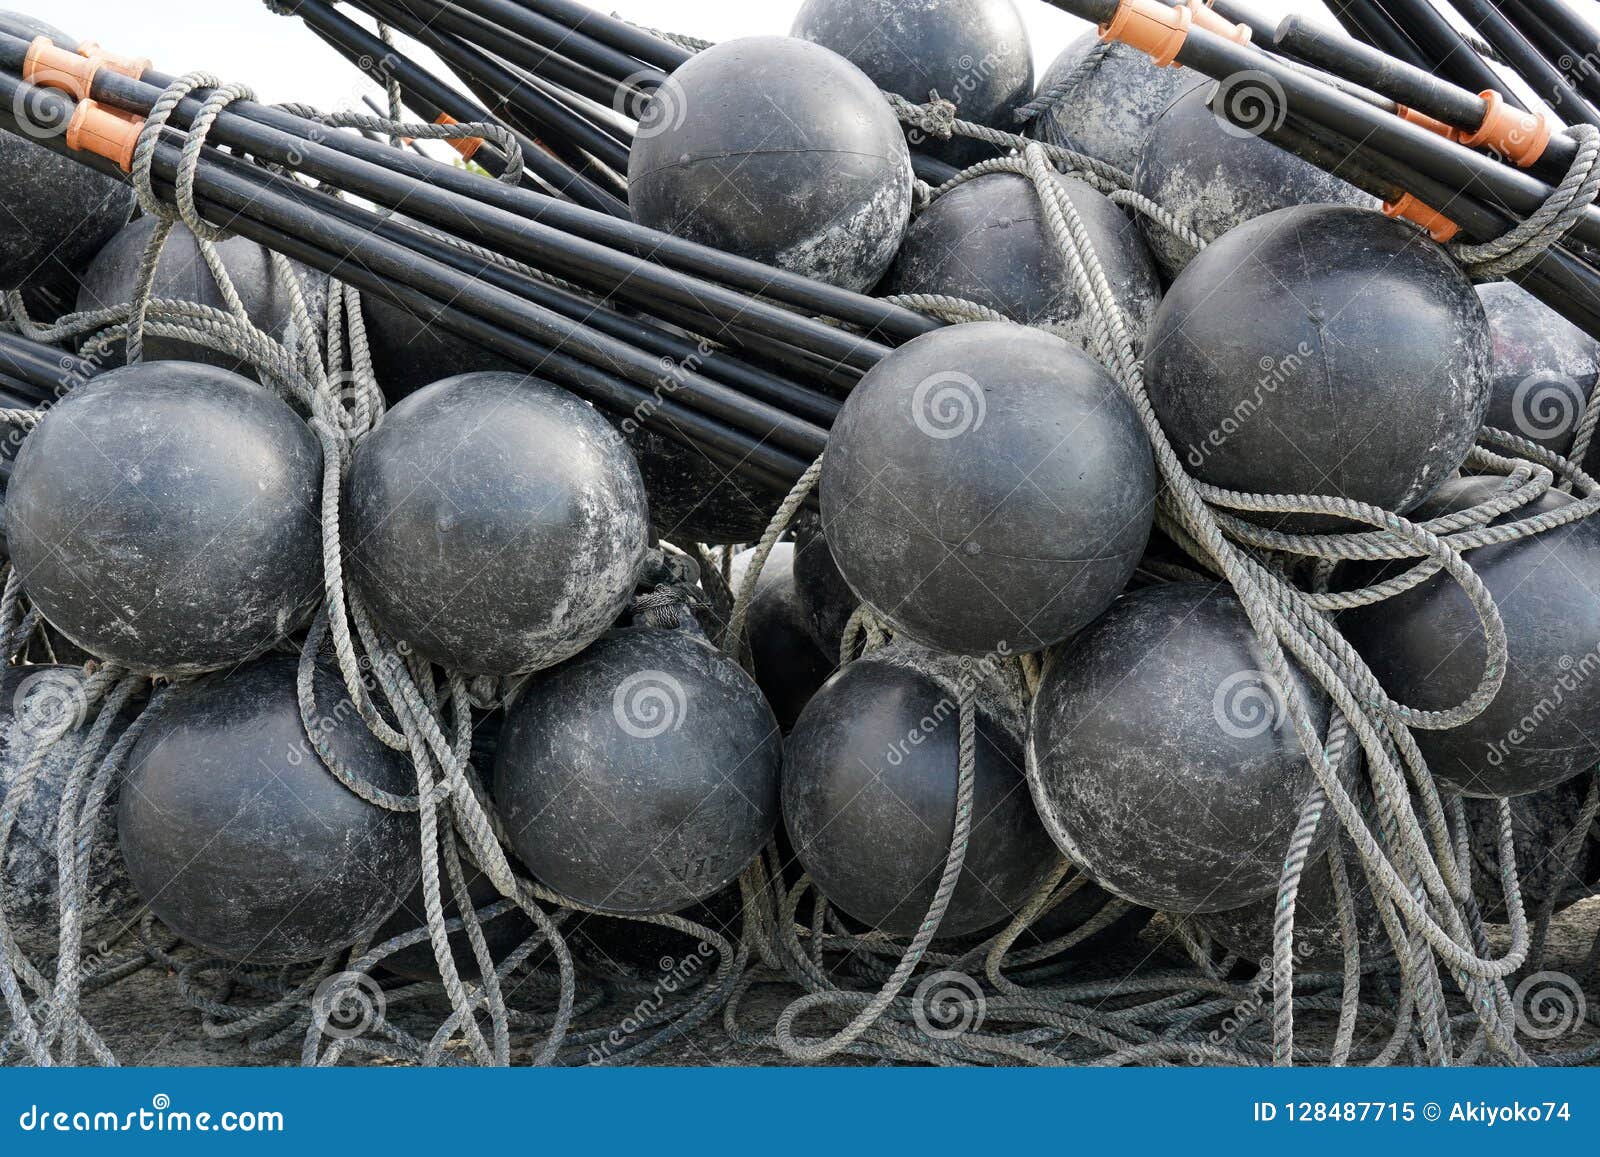 Black Spherical Plastic Floats of Fishing Nets Stock Image - Image